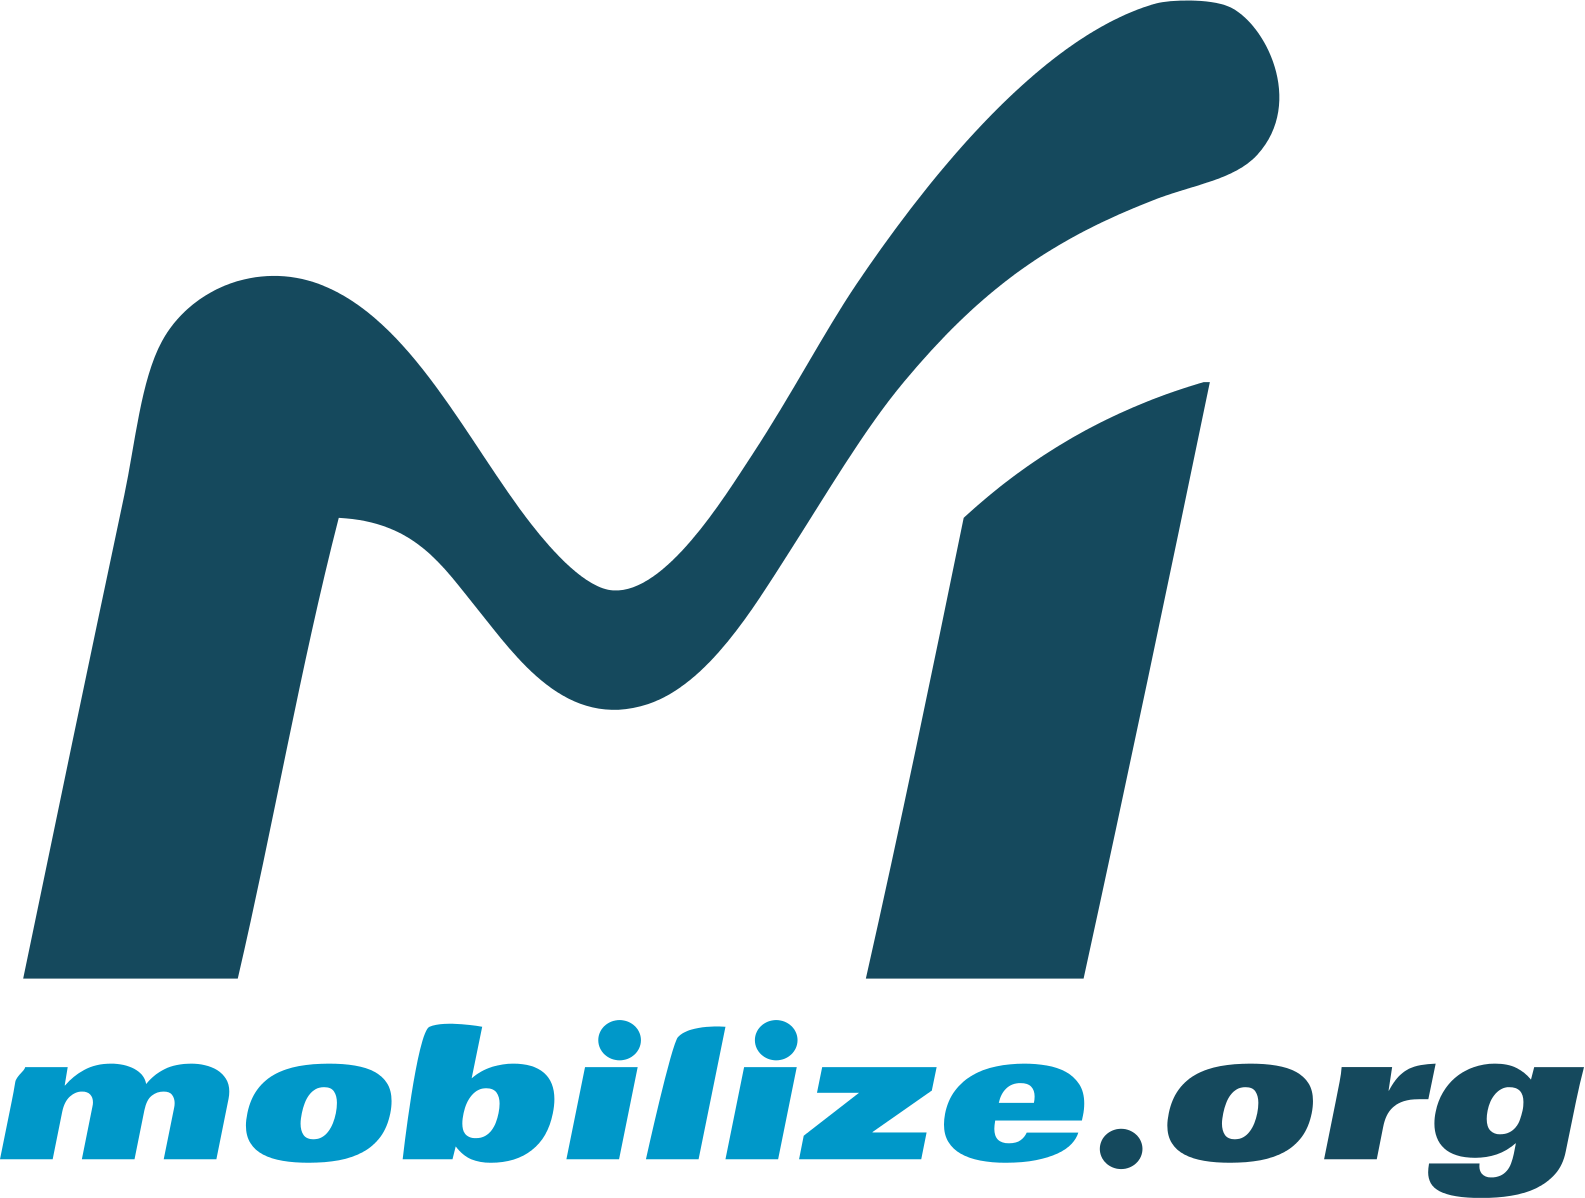 Logos org. Mobilize logo. Org logo. Логотип Оргсити. Sanlain логотип.